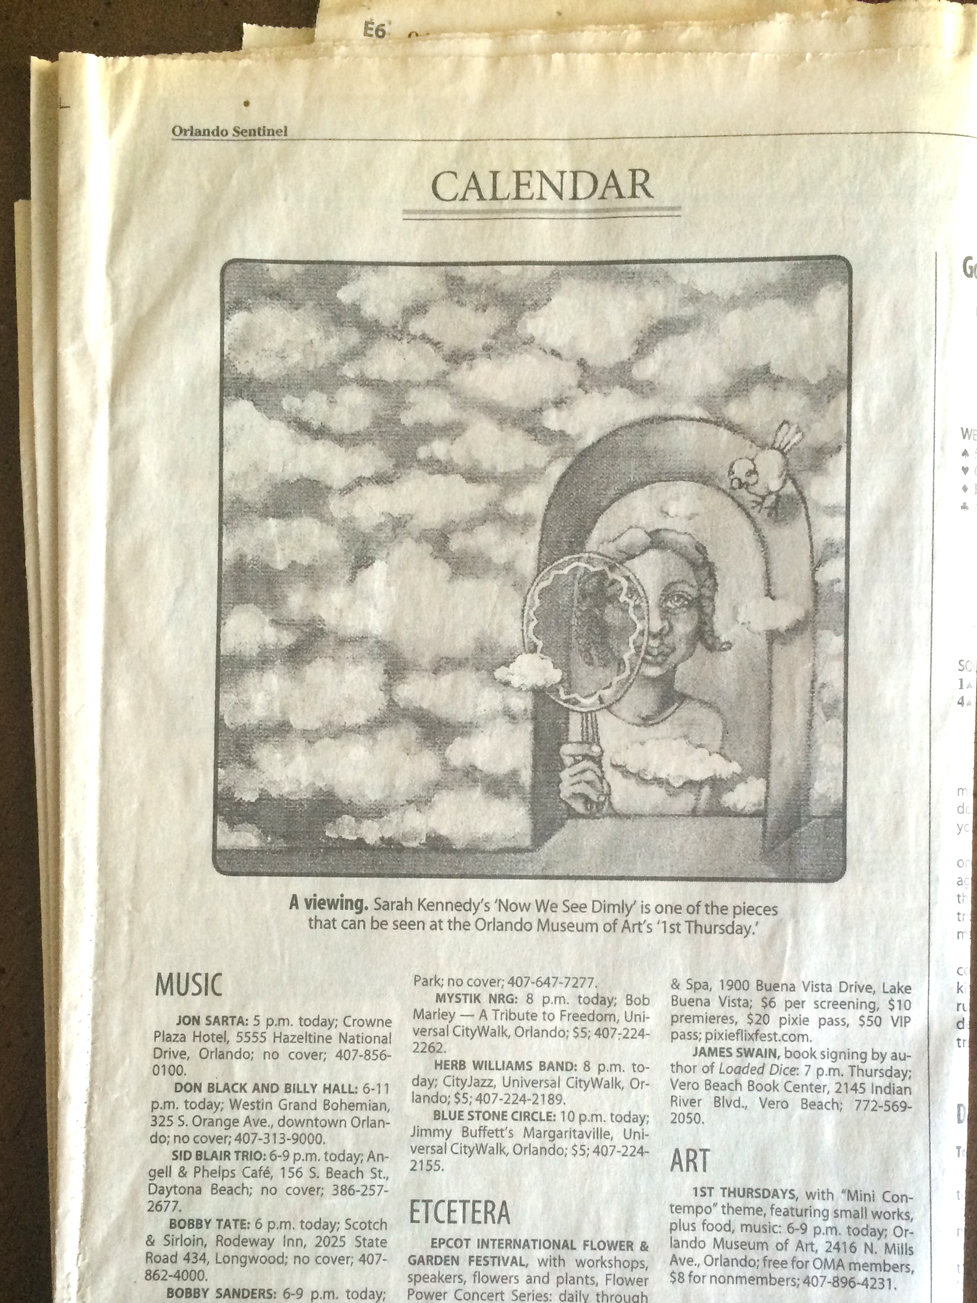 Orlando Sentinel - Calendar 2004